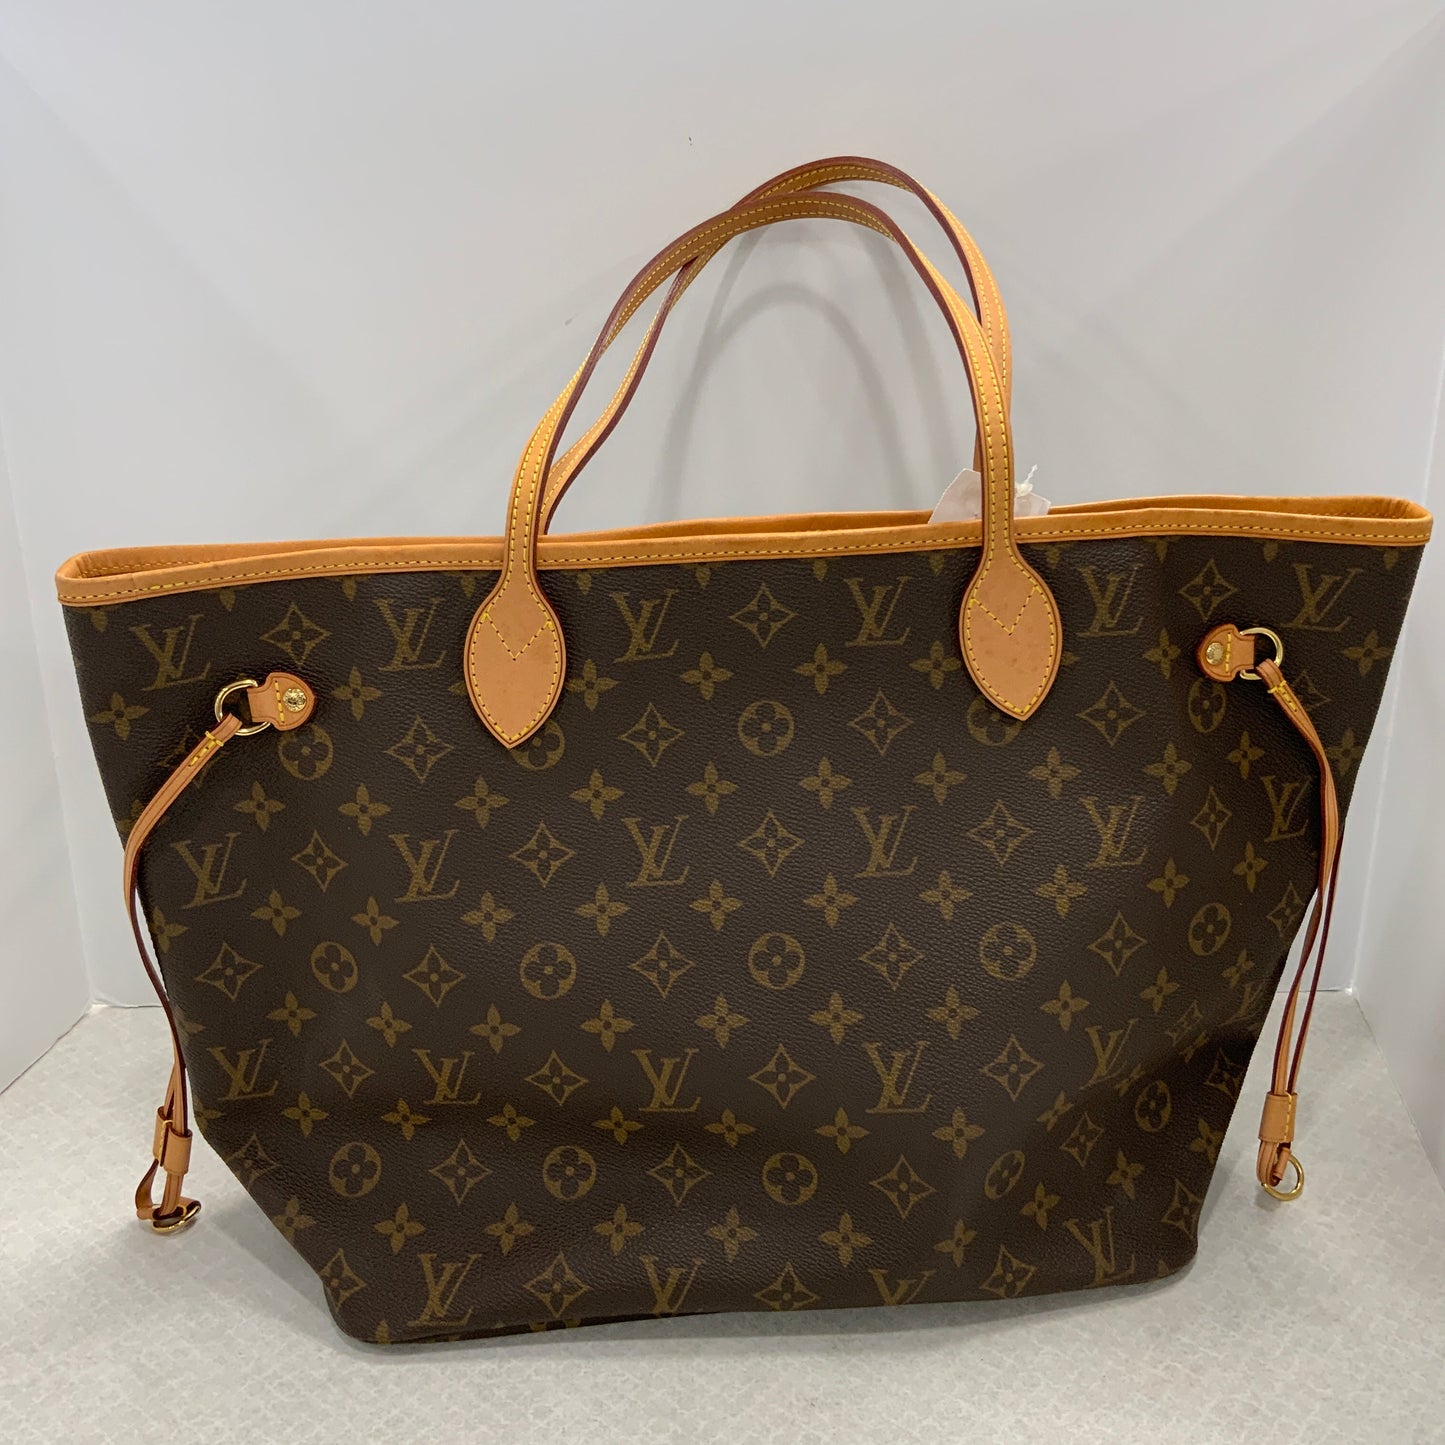 Brown Handbag Luxury Designer Louis Vuitton, Size Medium